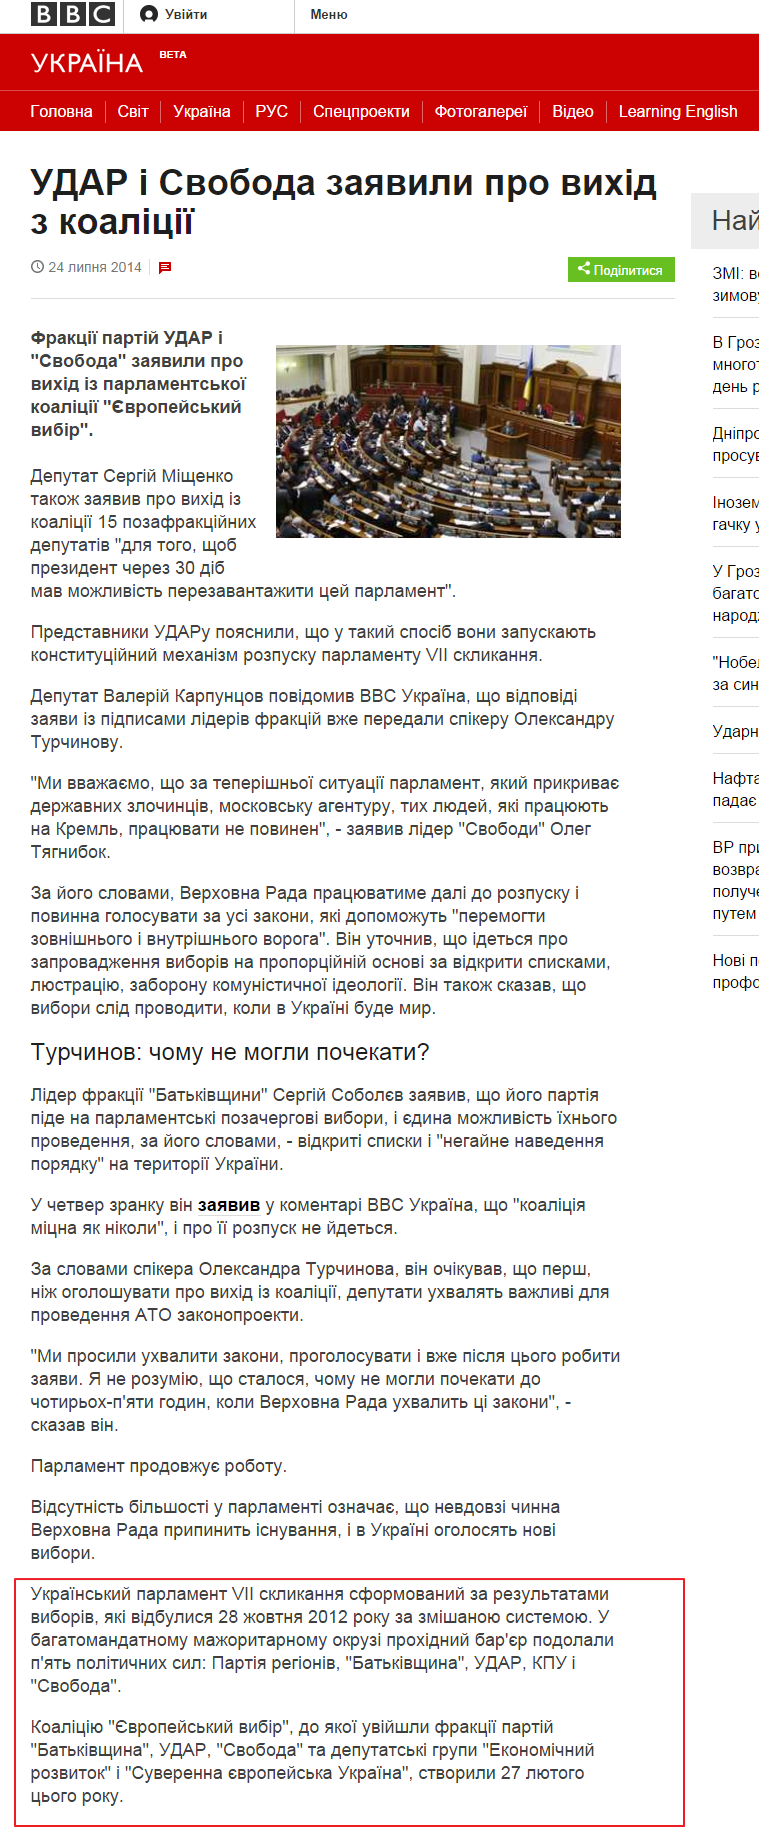 http://www.bbc.co.uk/ukrainian/news_in_brief/2014/07/140724_rl_udar_coalition